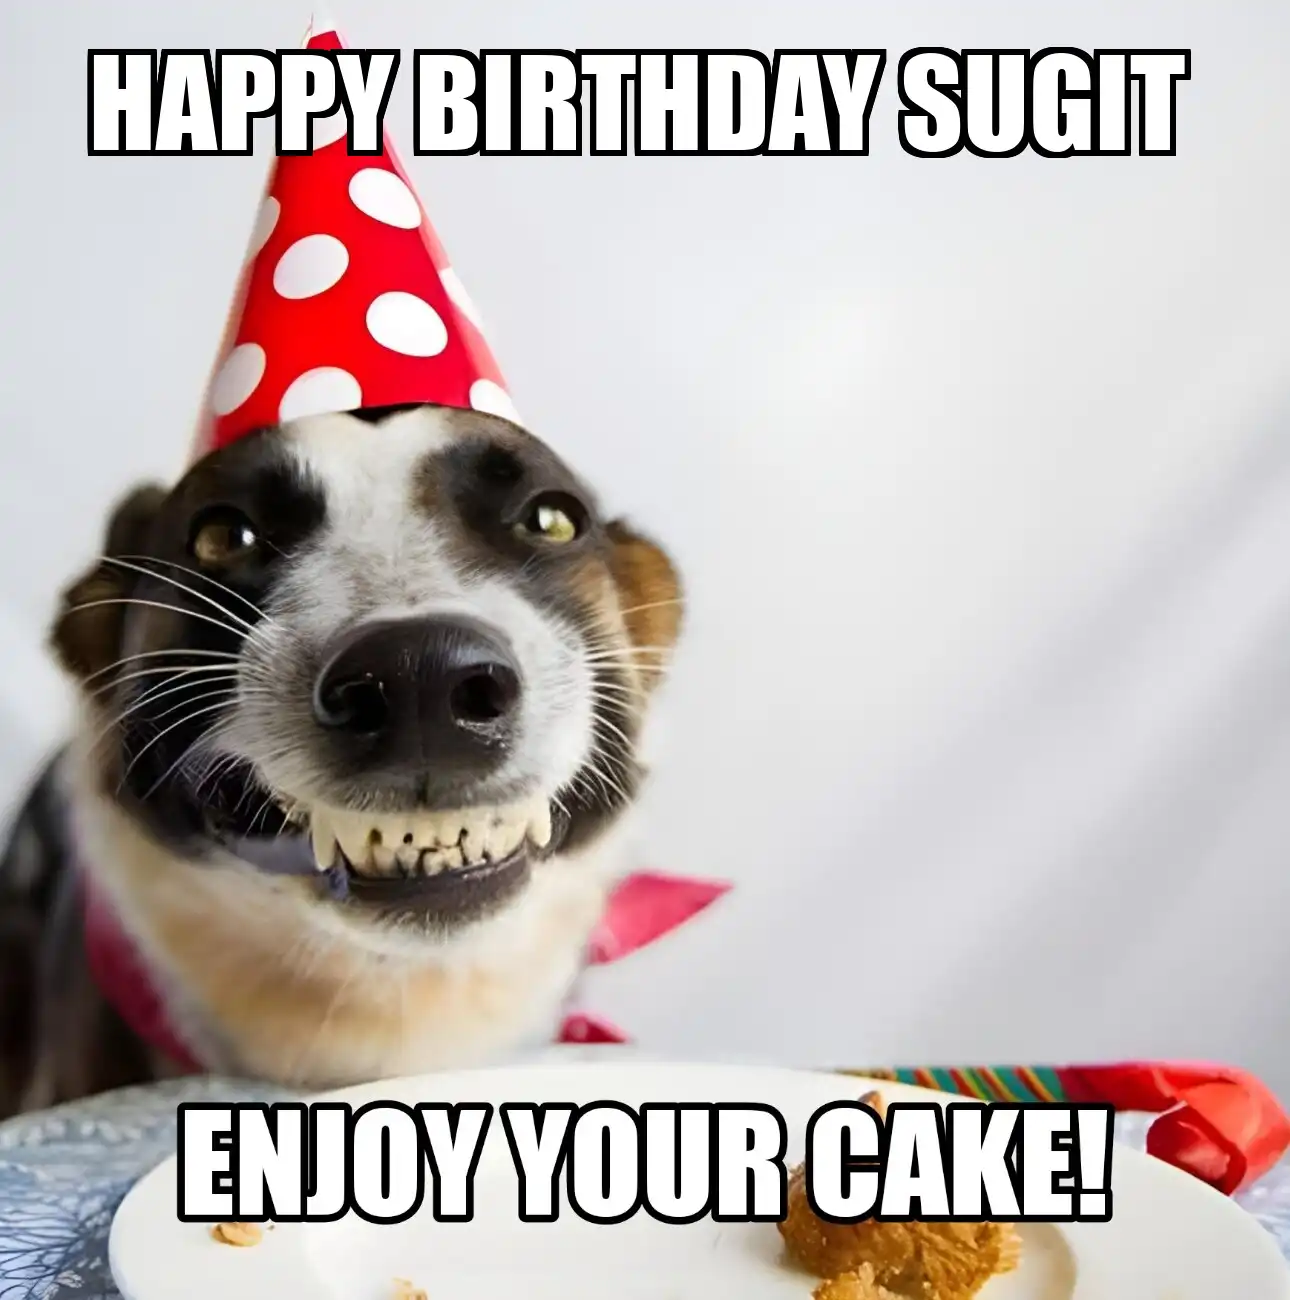 Happy Birthday Sugit Enjoy Your Cake Dog Meme